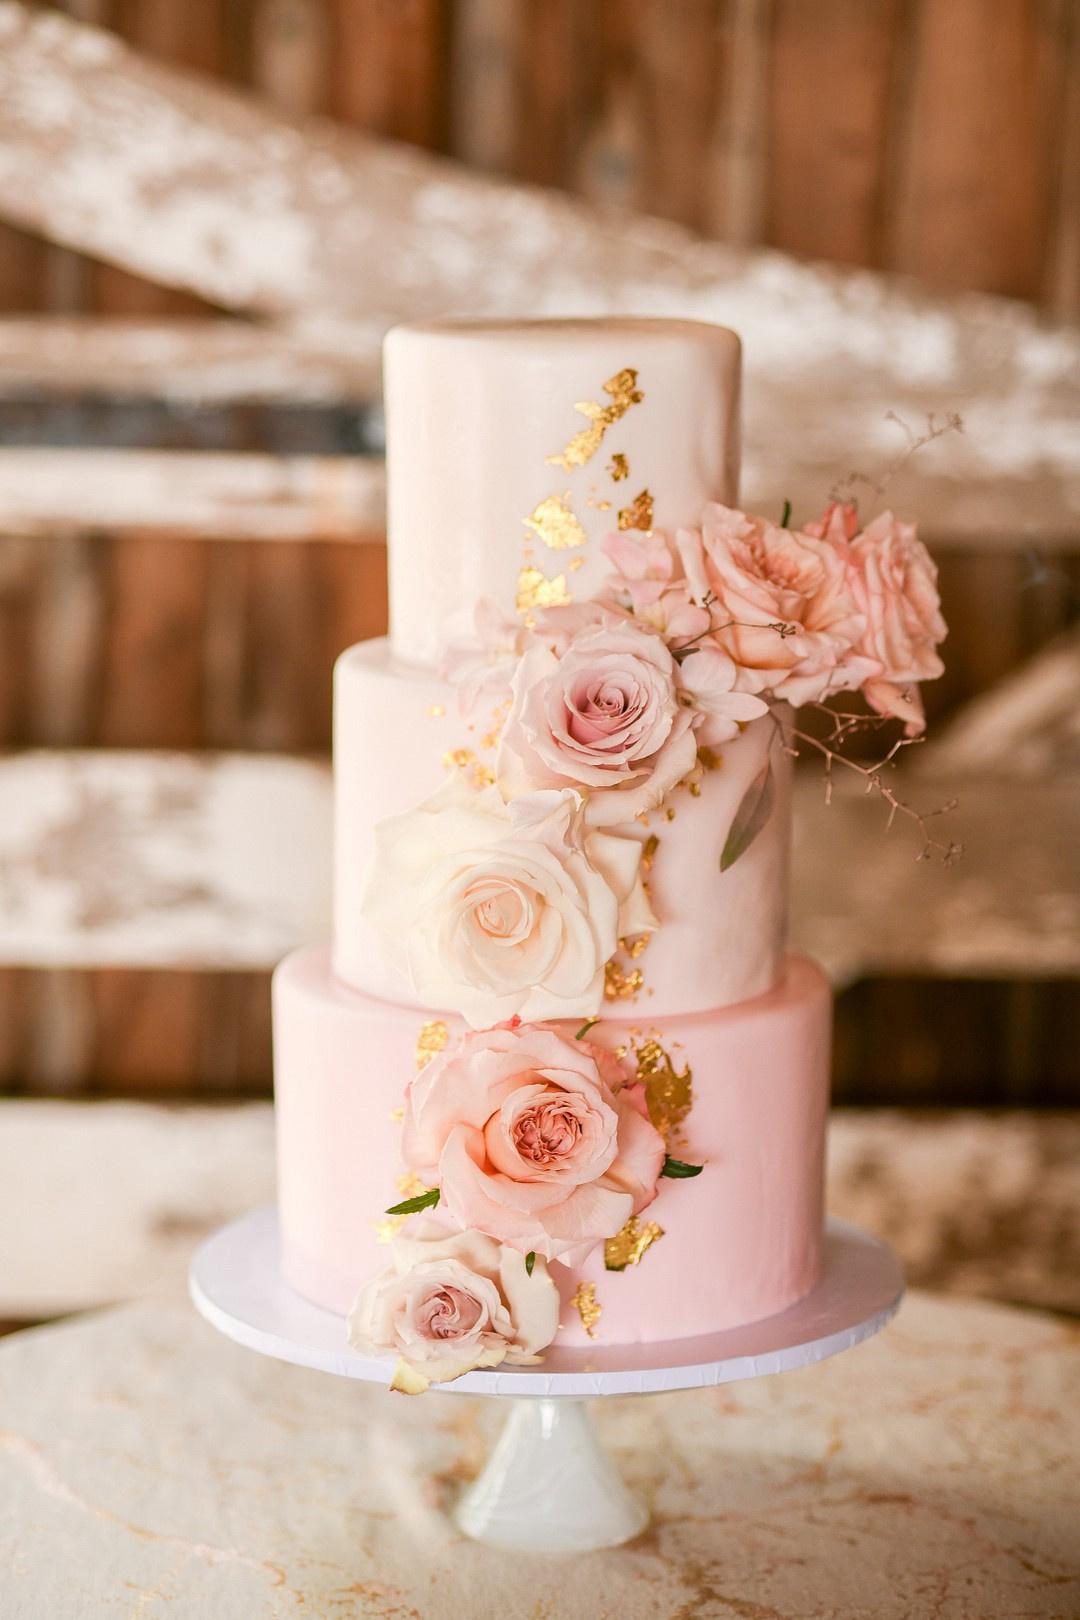 Wedding Cakes - Tiers of Heaven